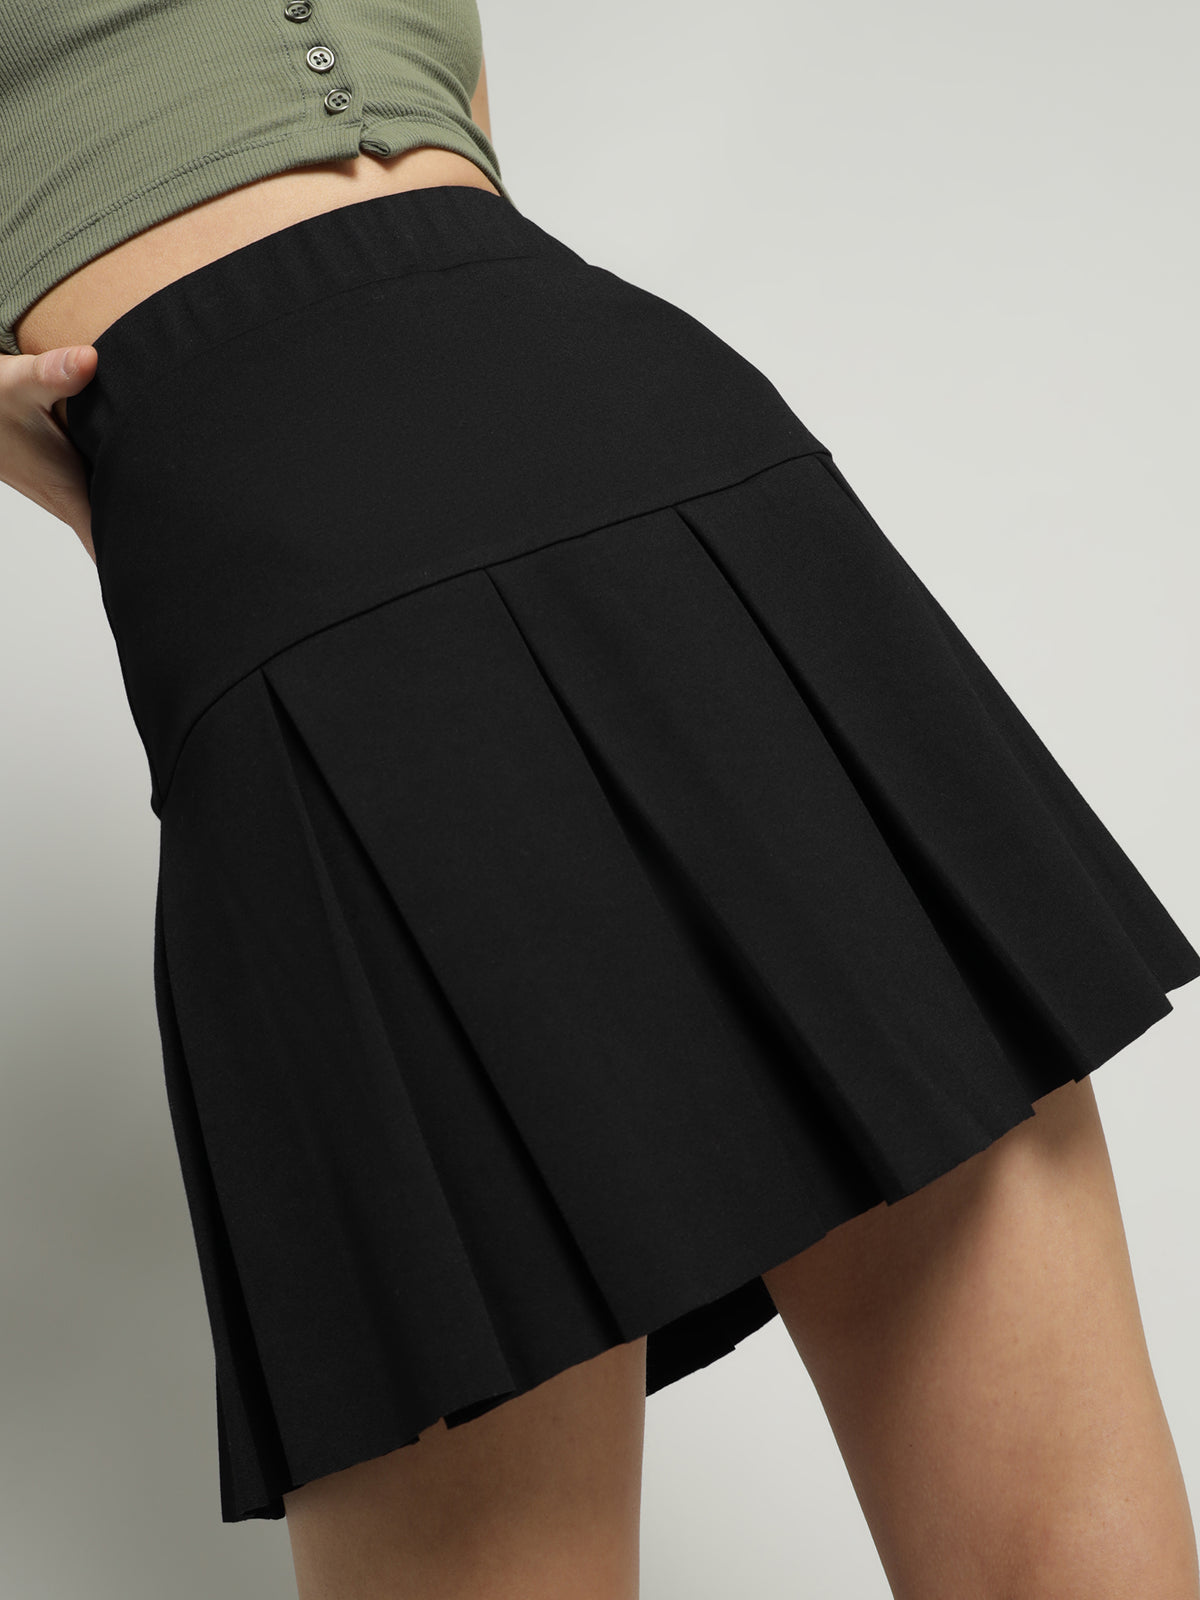 Heather Pleated Mini Skirt in Black